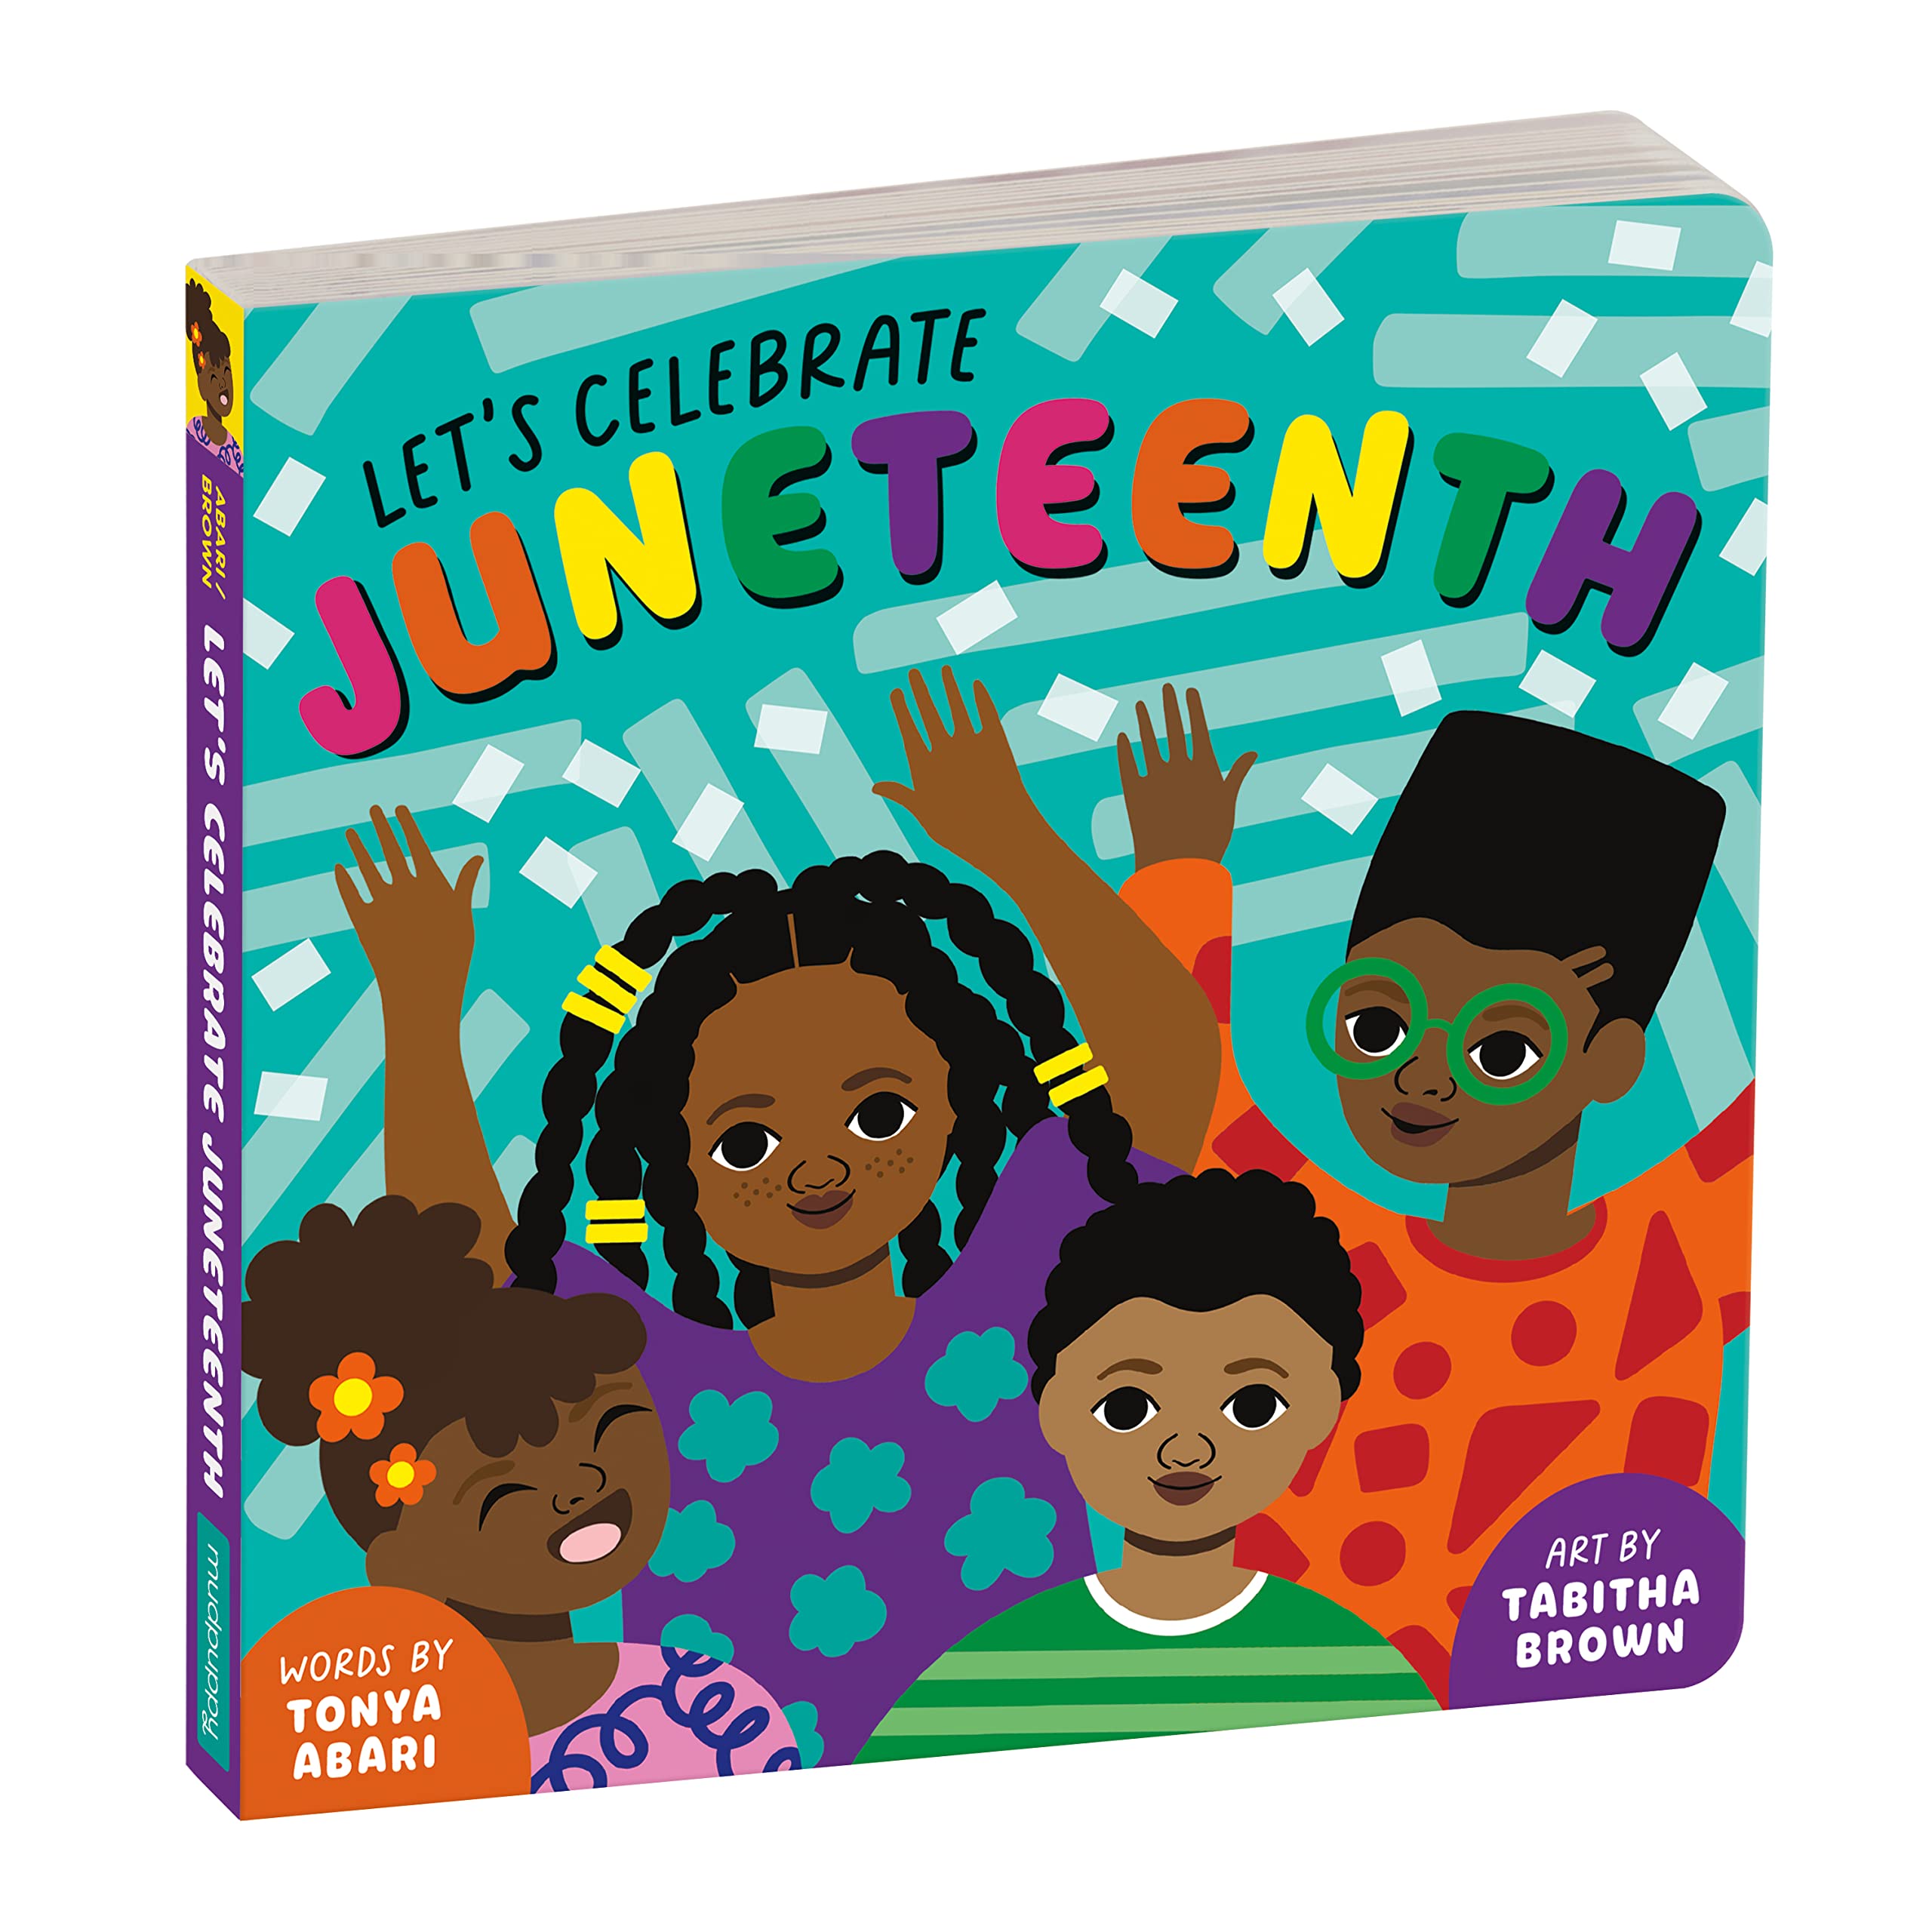 Let's Celebrate Juneteenth kids book